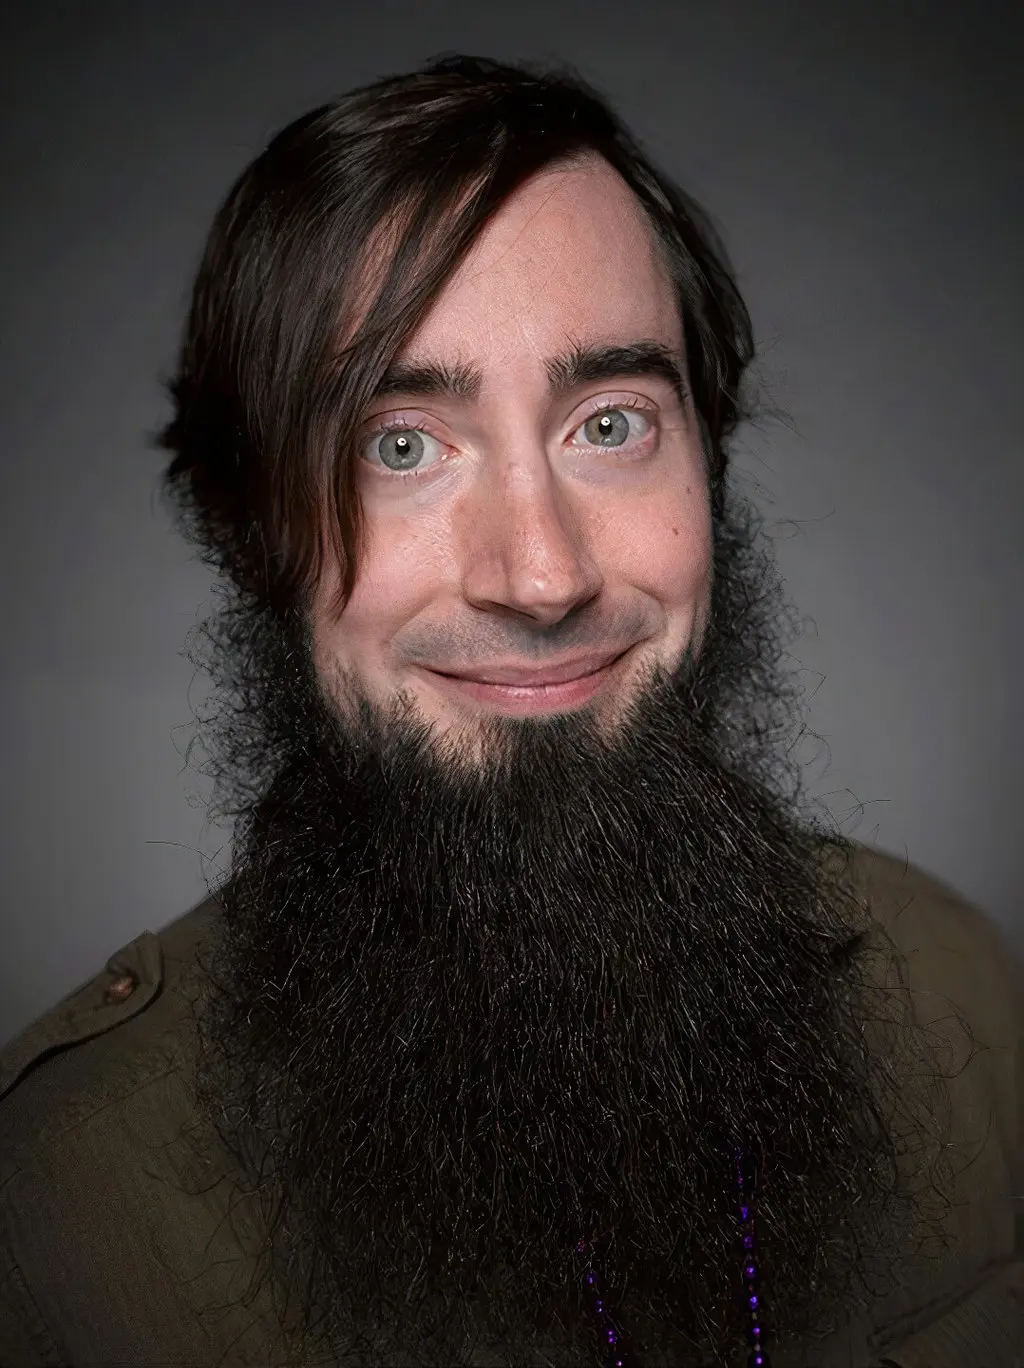 Medium-Length Beard Without Mustache